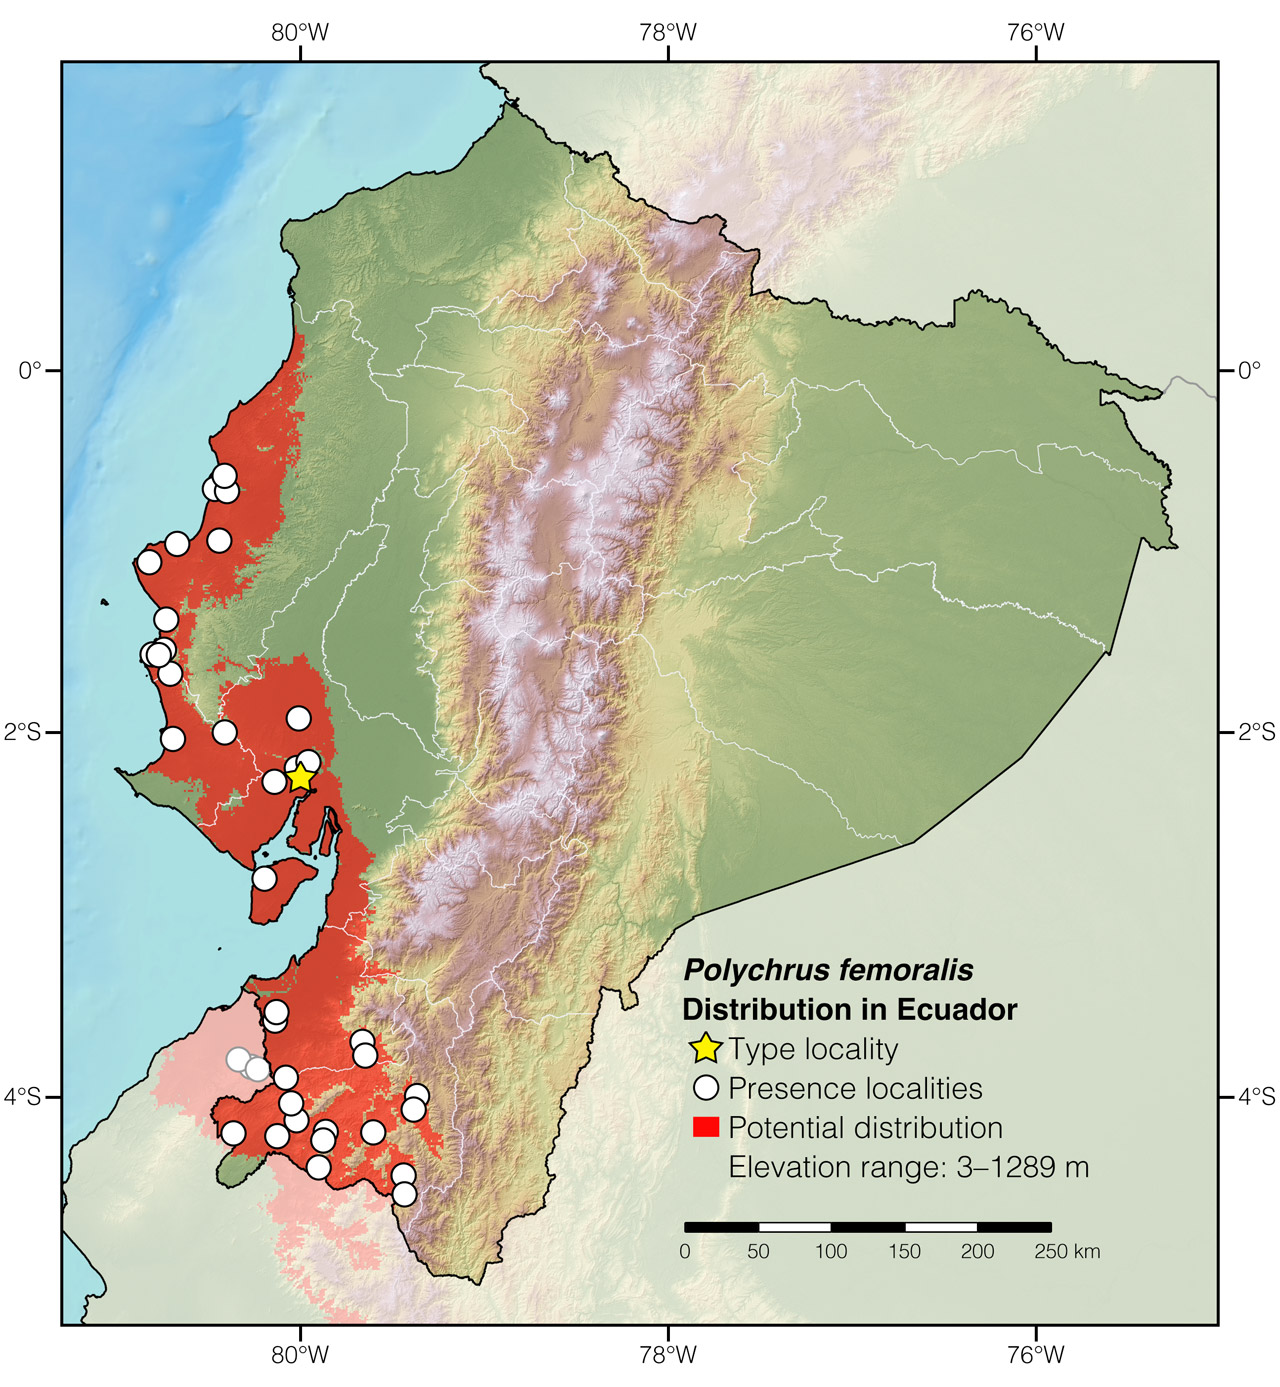 Distribution of Polychrus femoralis in Ecuador